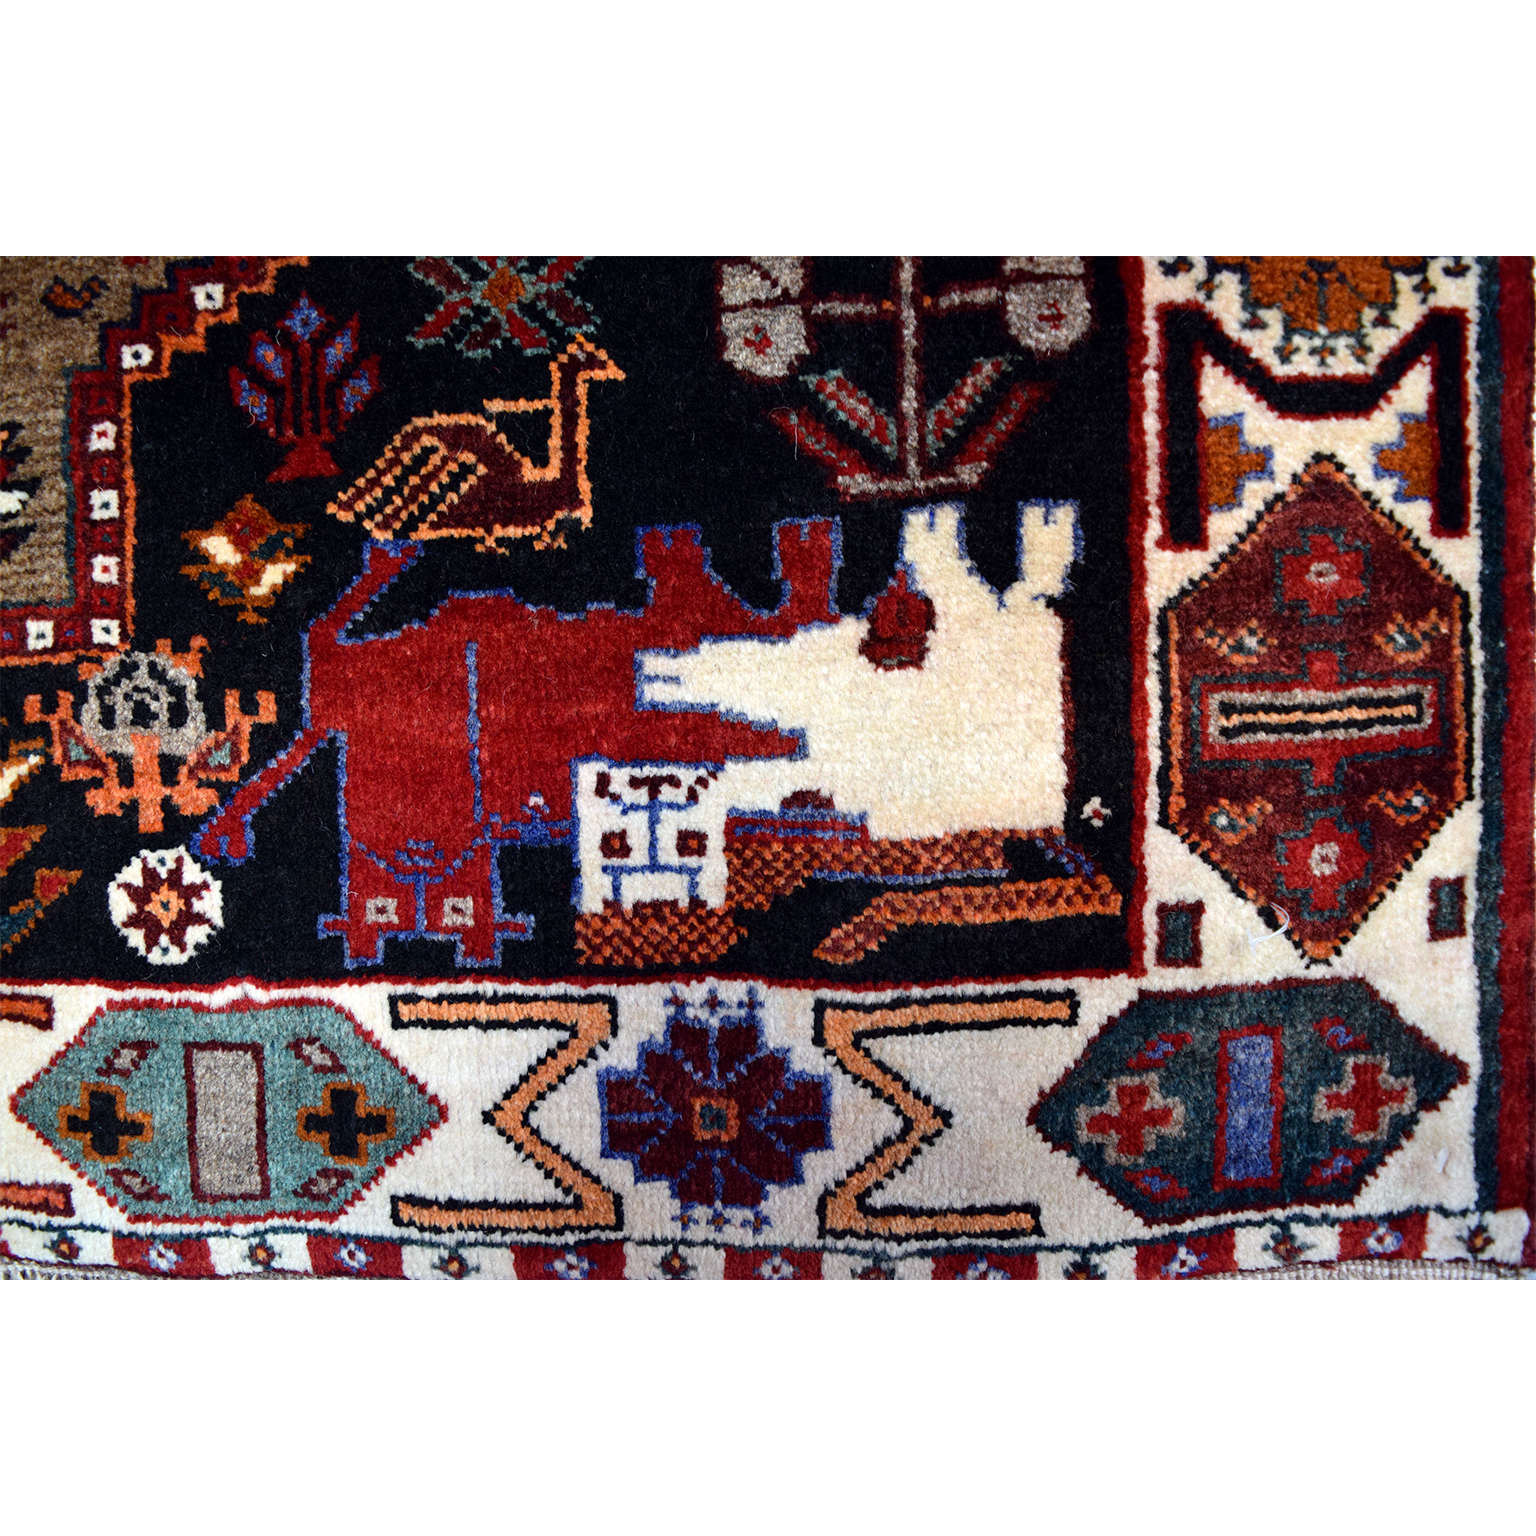 3' x 5' Persian Qashqai Carpet Featuring King Bahram vs. The Lion detail photo